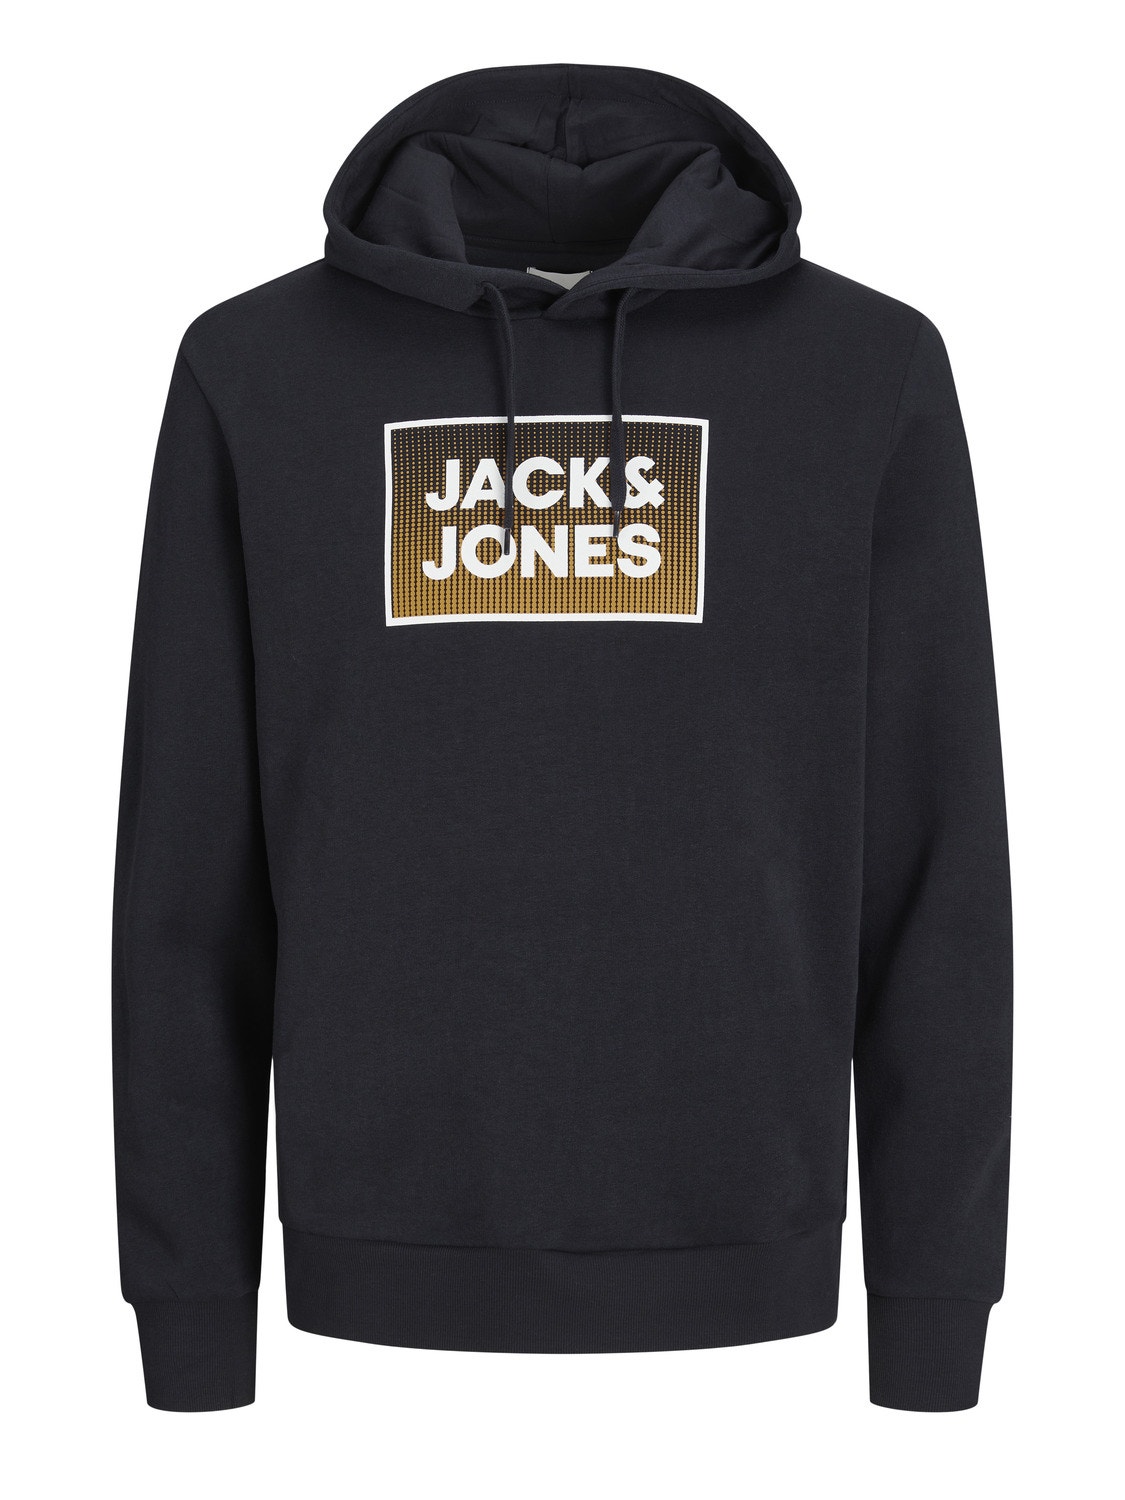 Jack & Jones Plus Size Gedruckt Kapuzenpullover -Dark Navy - 12254867